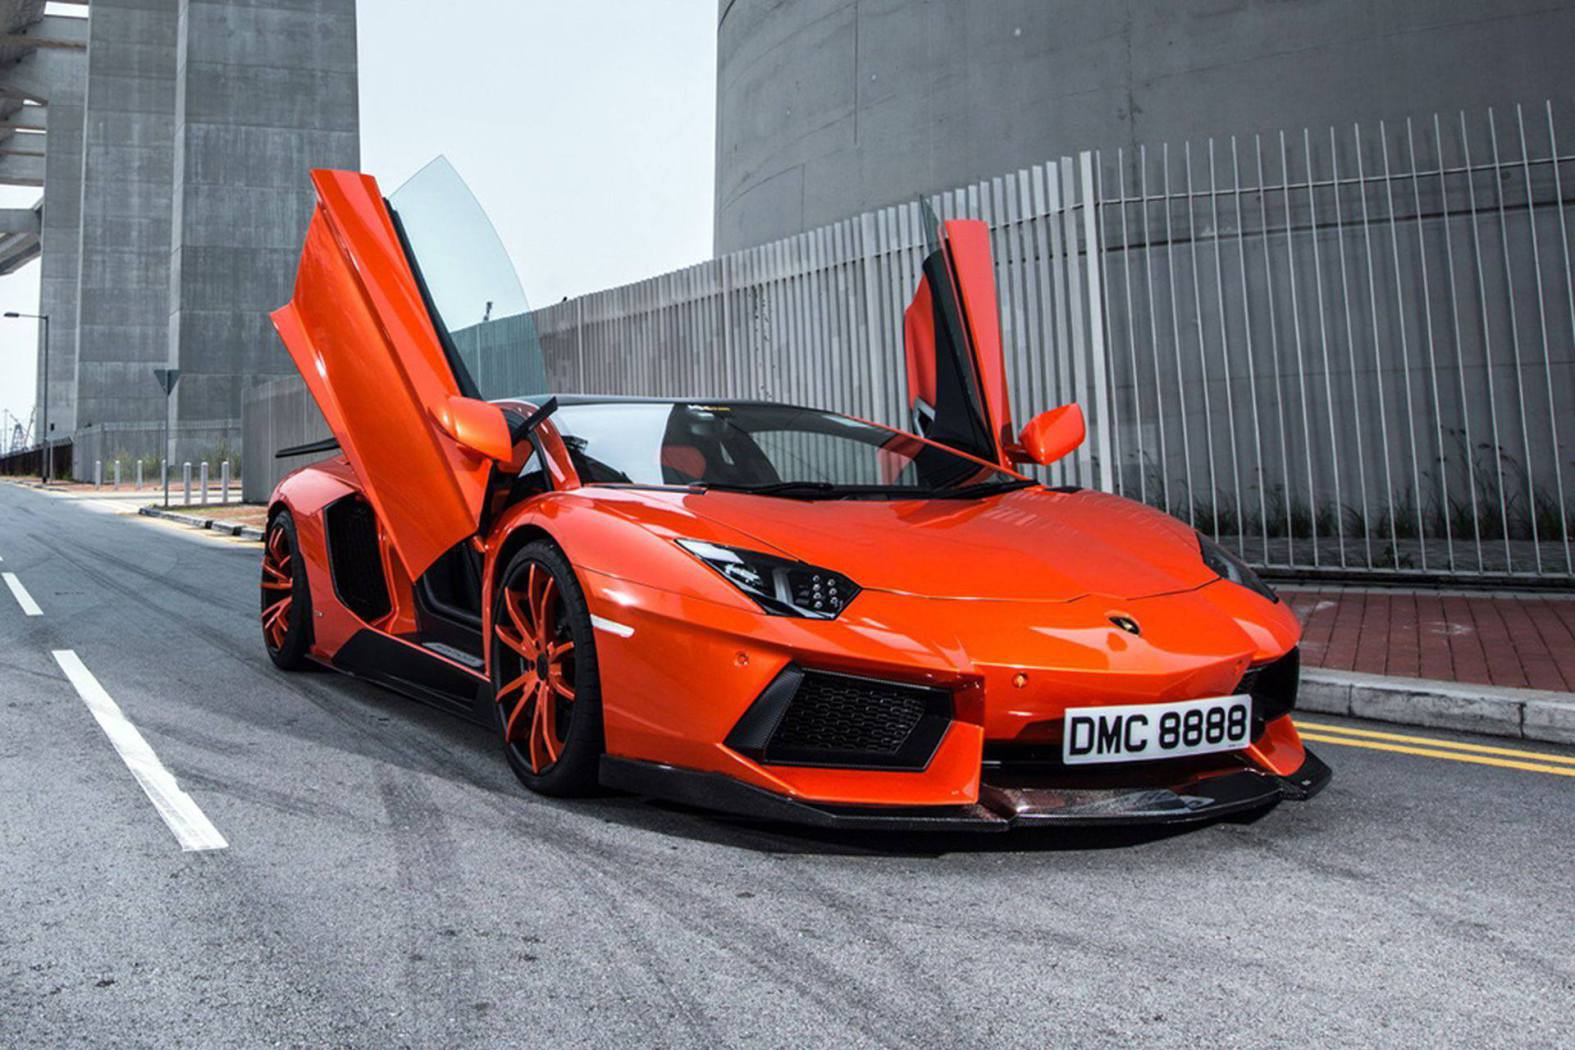 Lamborghini-Aventador-DMC-body-kit-tuning-empire (1)